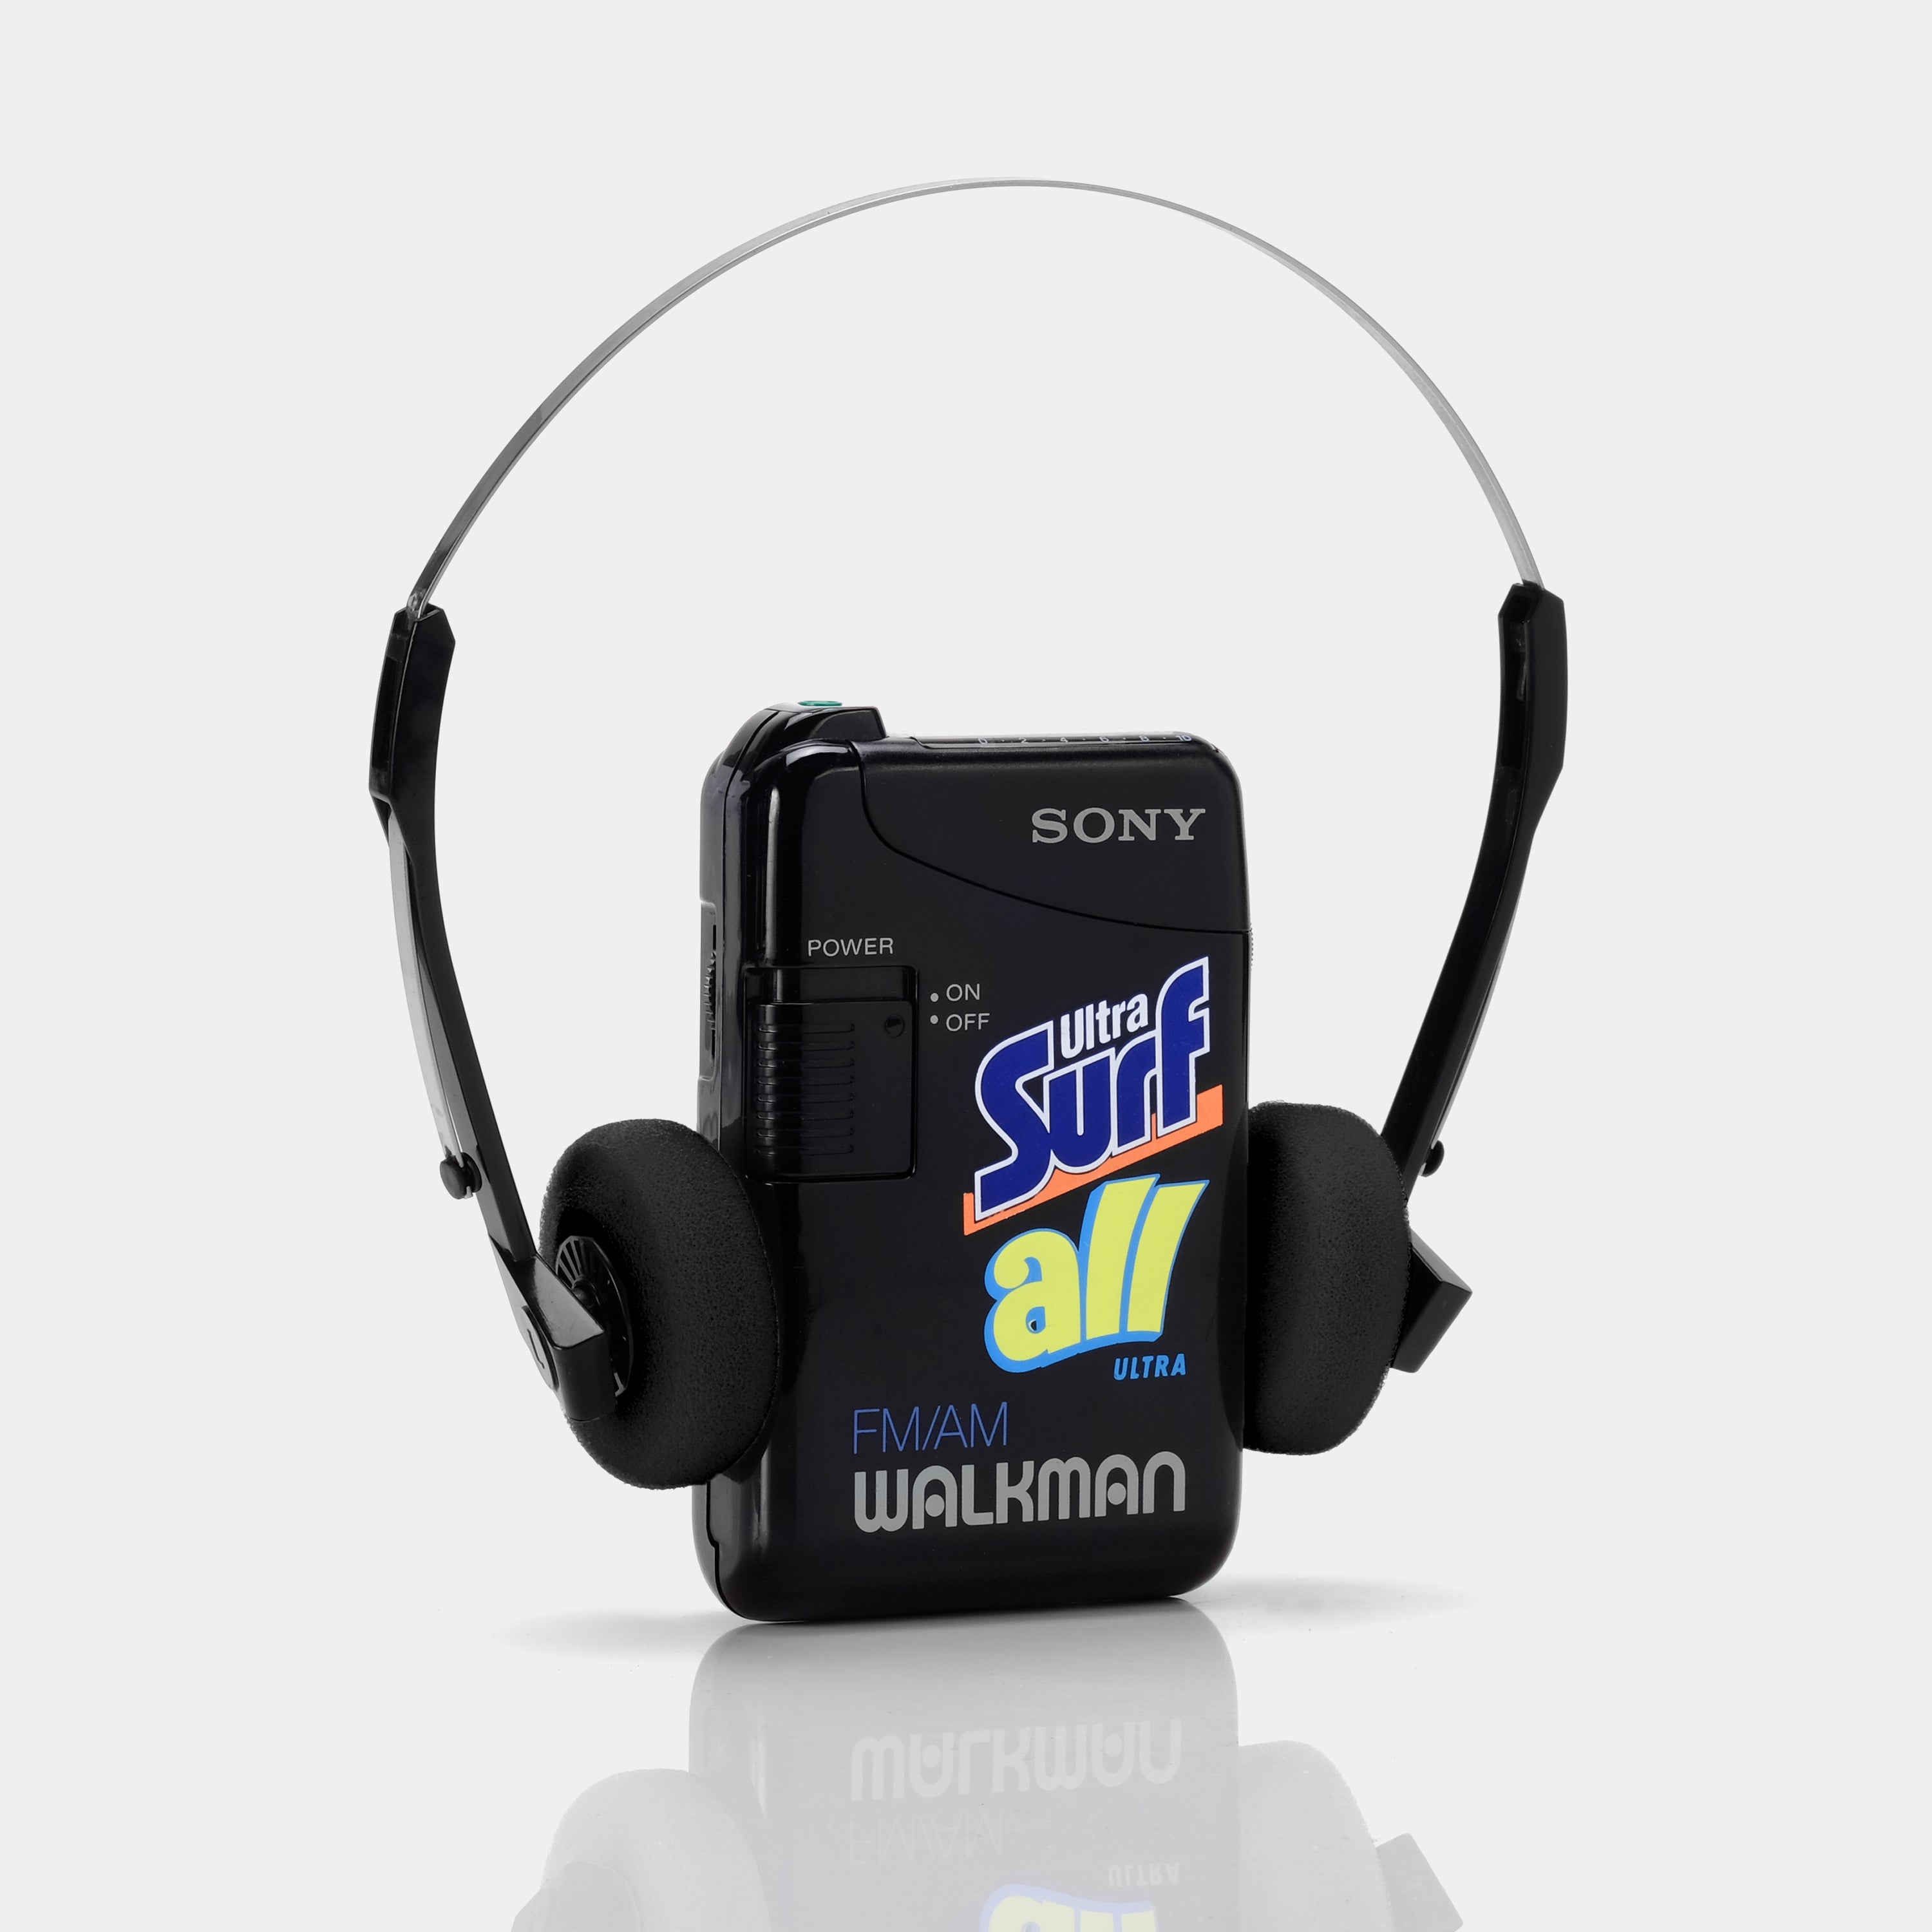 Sony Walkman SRF-29 FM Portable Radio